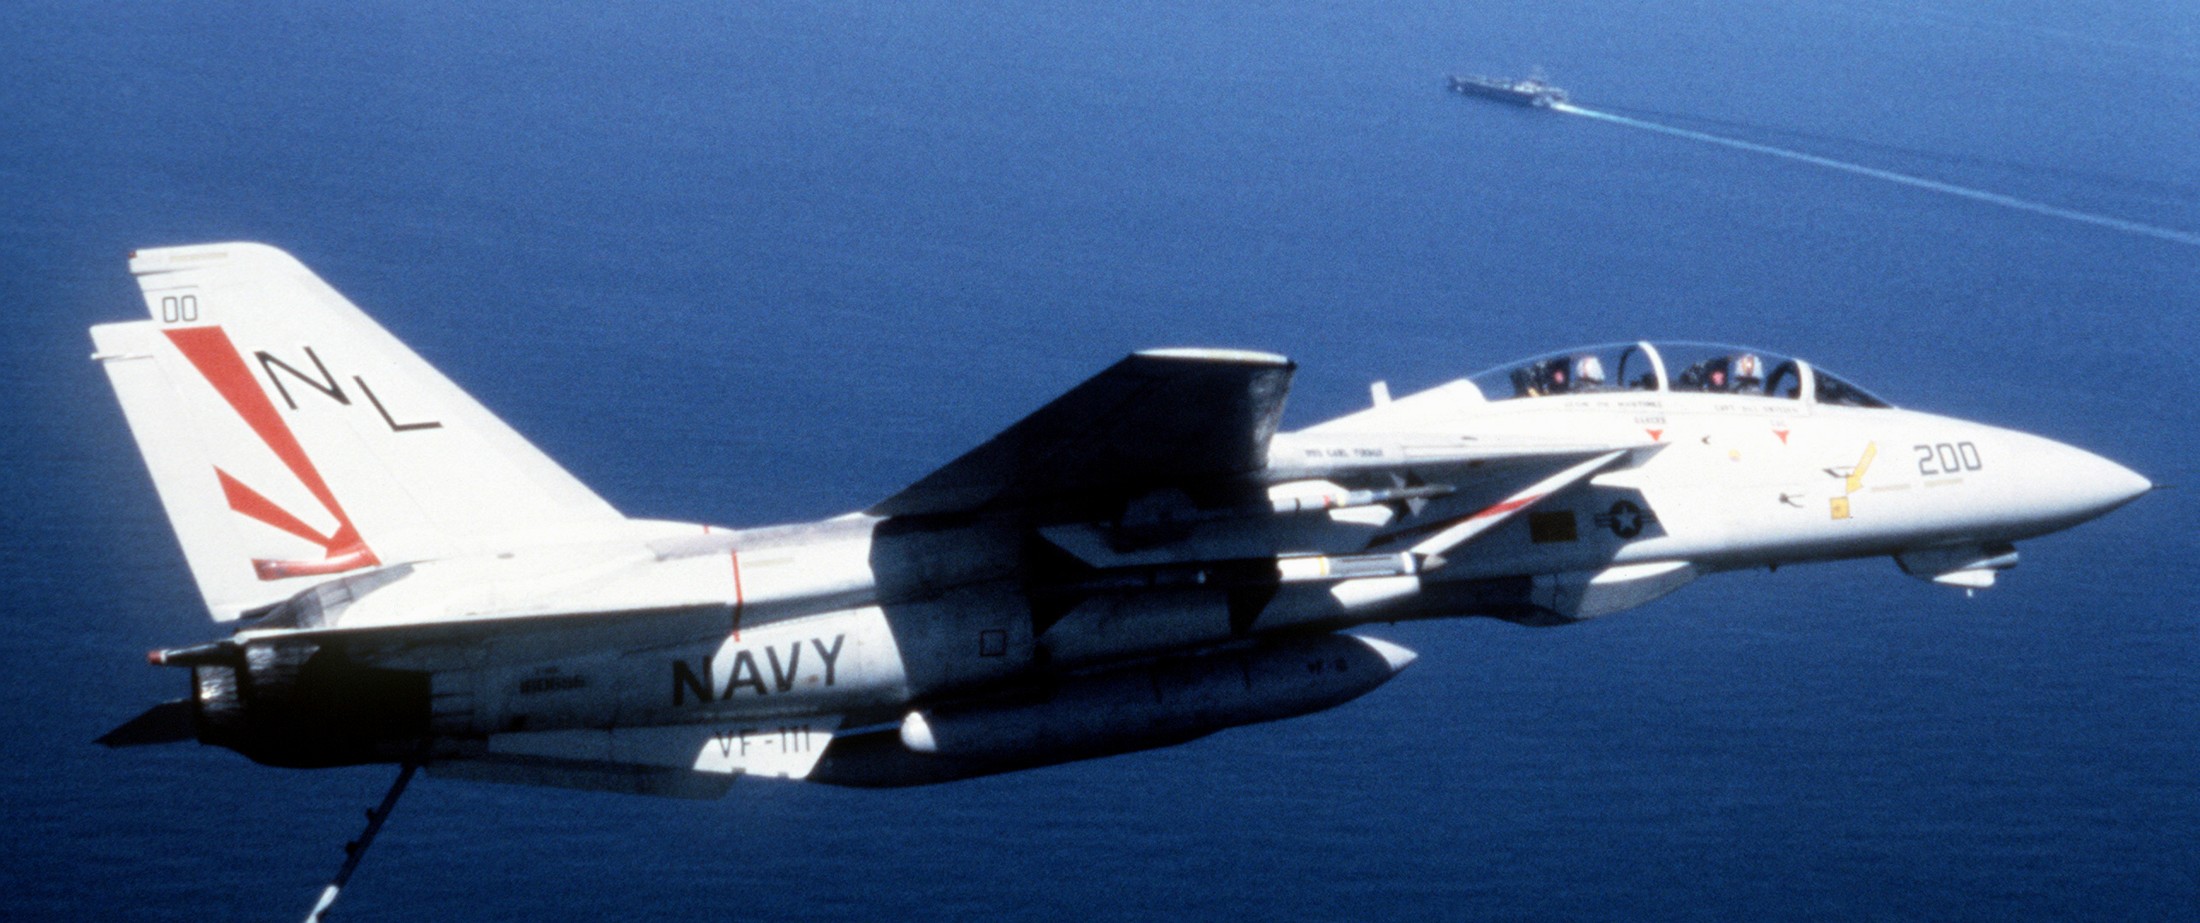 vf-111 sundowners fighter squadron f-14a tomcat cvw-15 uss carl vinson cvn-70 us navy 08